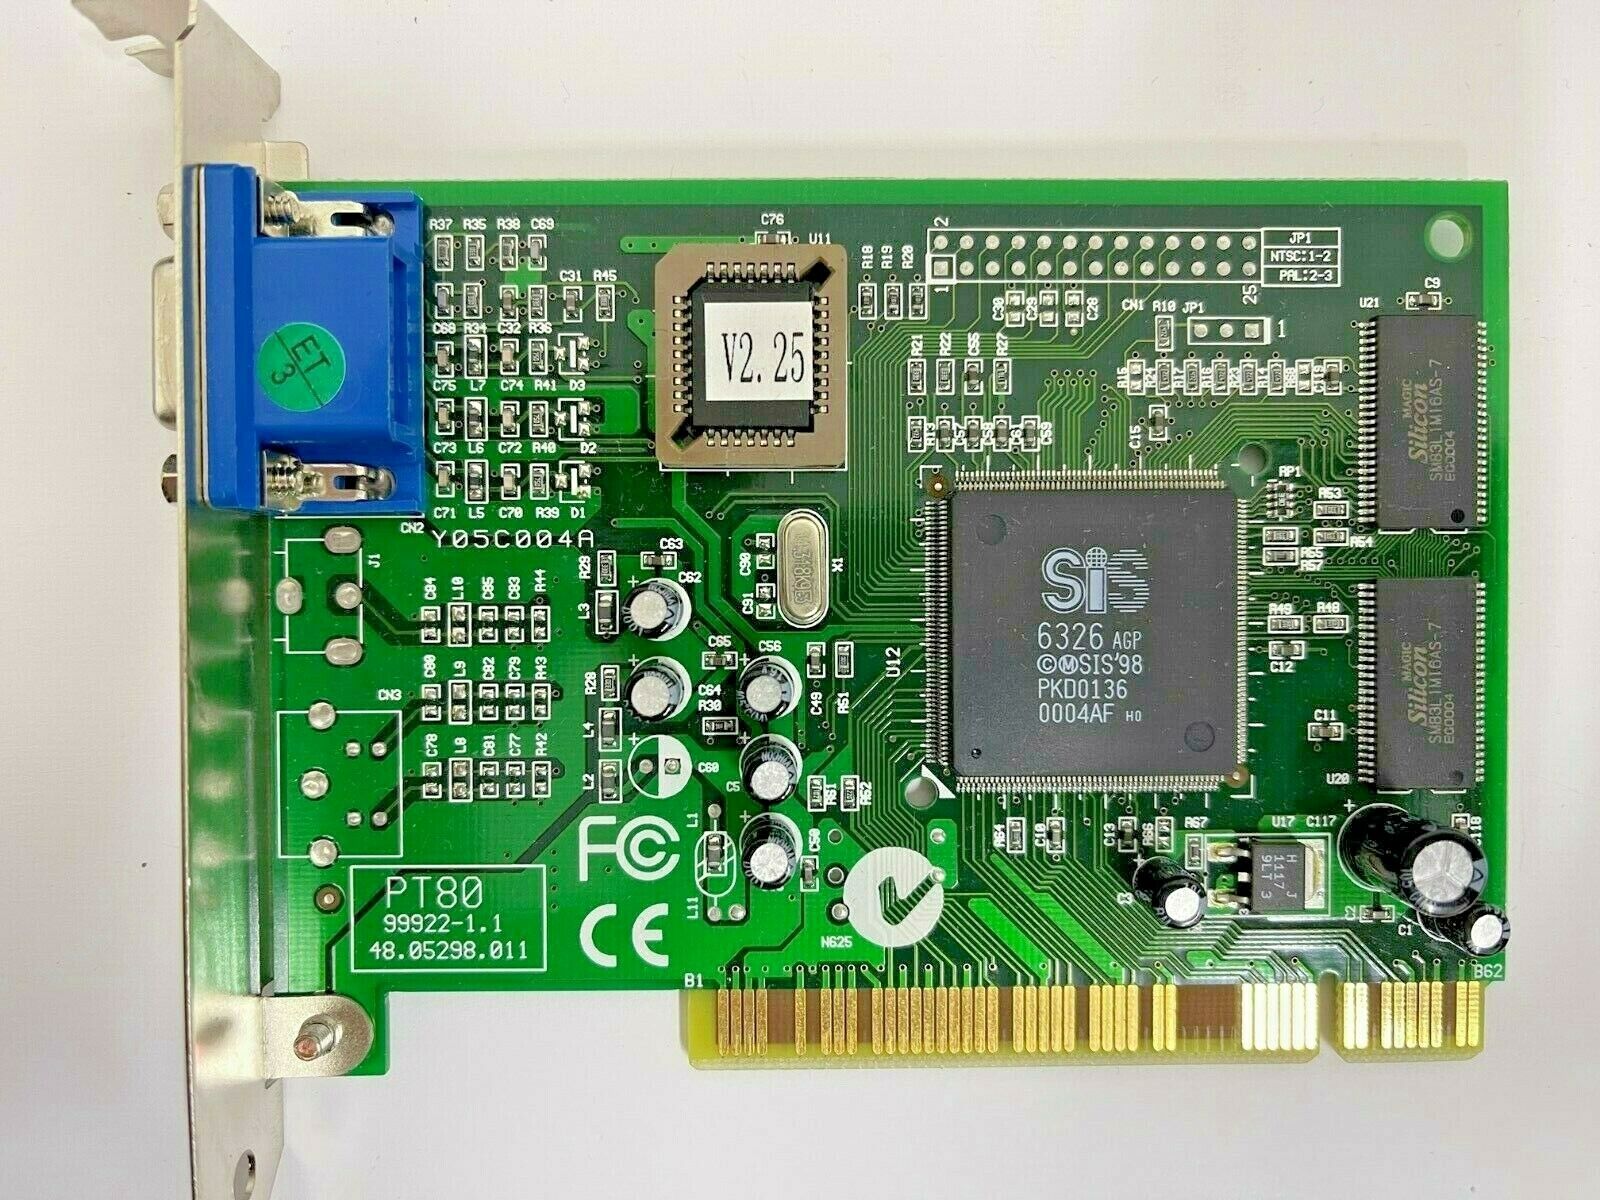 VINTAGE ACER AOPEN PT80 SIS 6326 4 MB PCI VGA CARD 99922-1 48.05290.011 MXB26